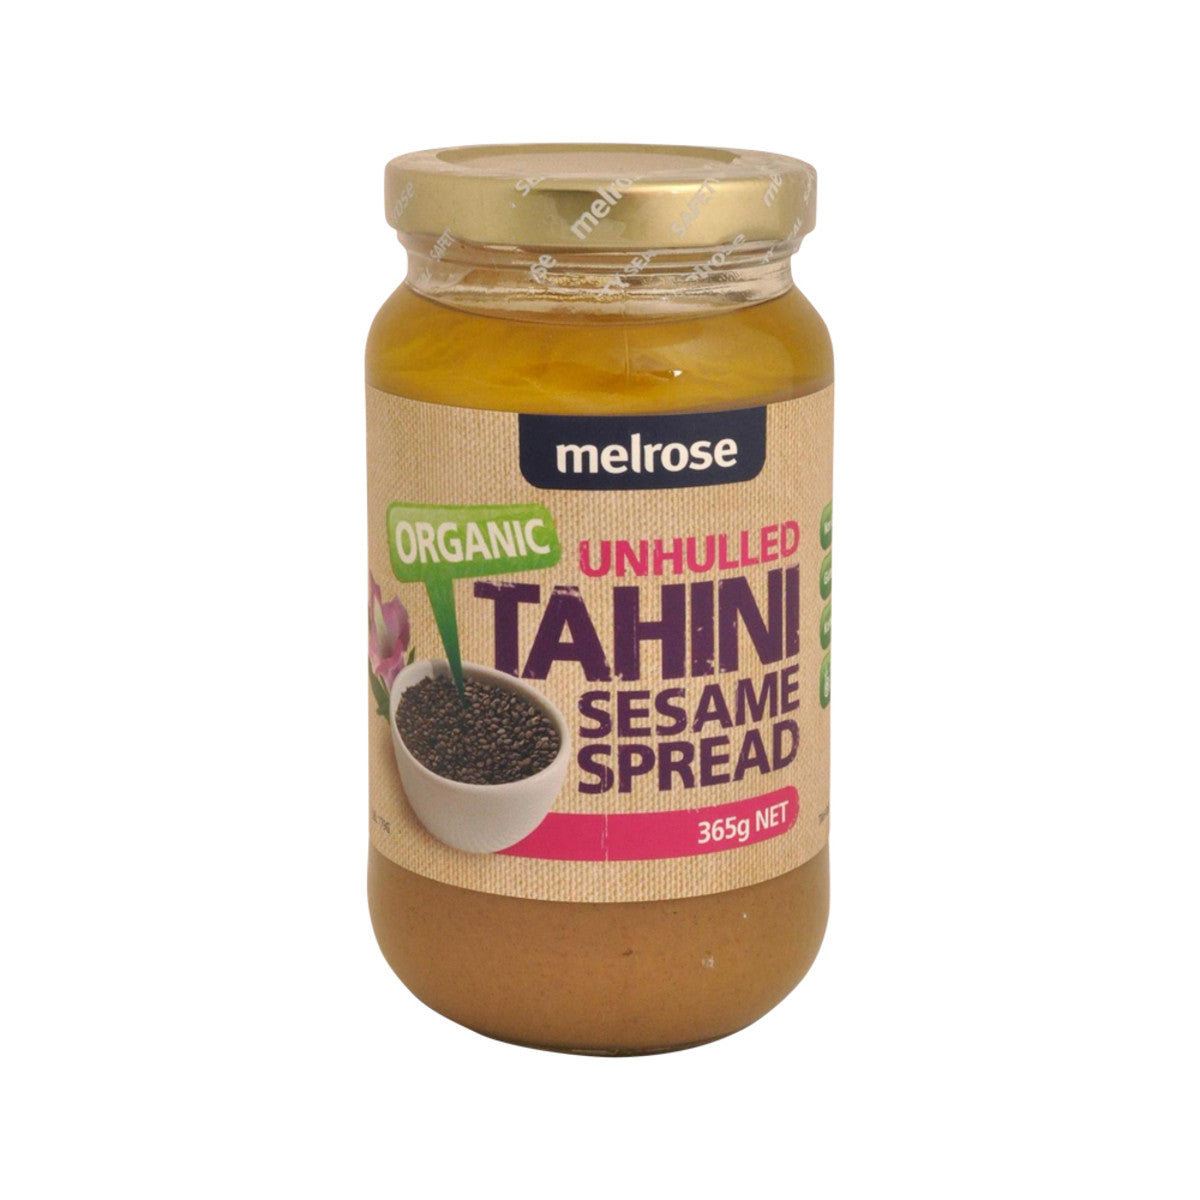 Melrose - Organic Tahini Sesame Spread Unhulled